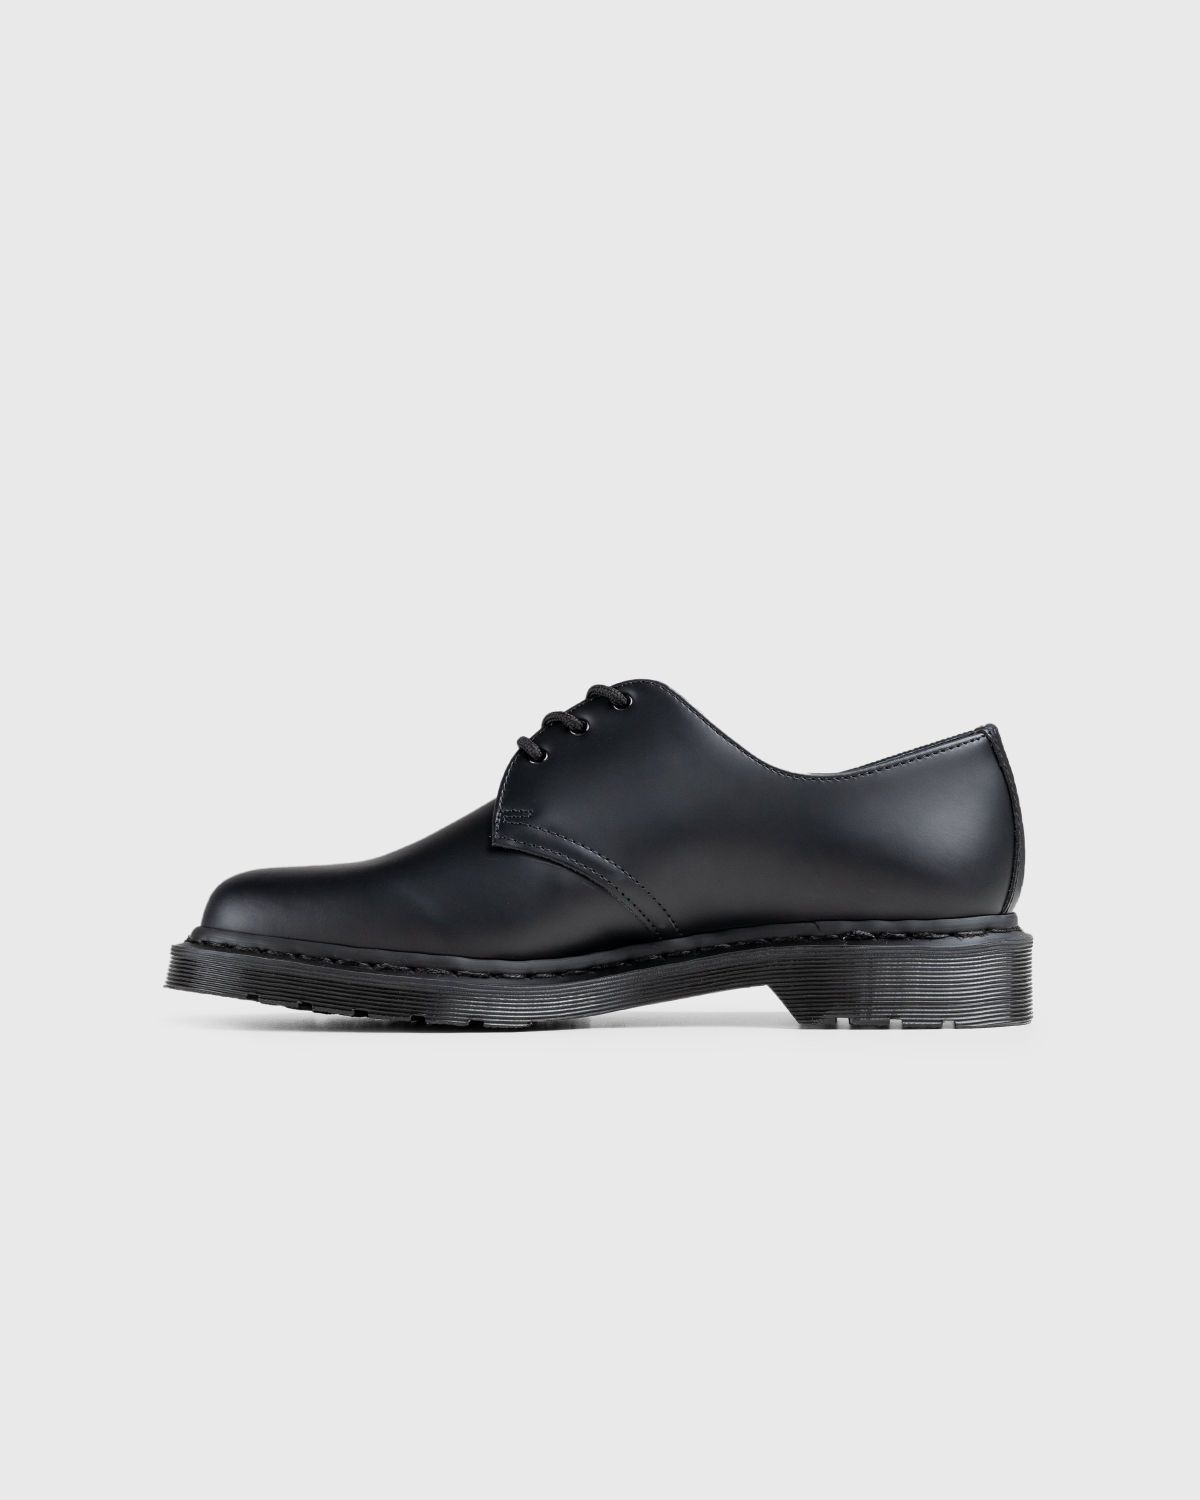 Dr. Martens – 1461 Mono Black Smooth - Shoes - Black - Image 2